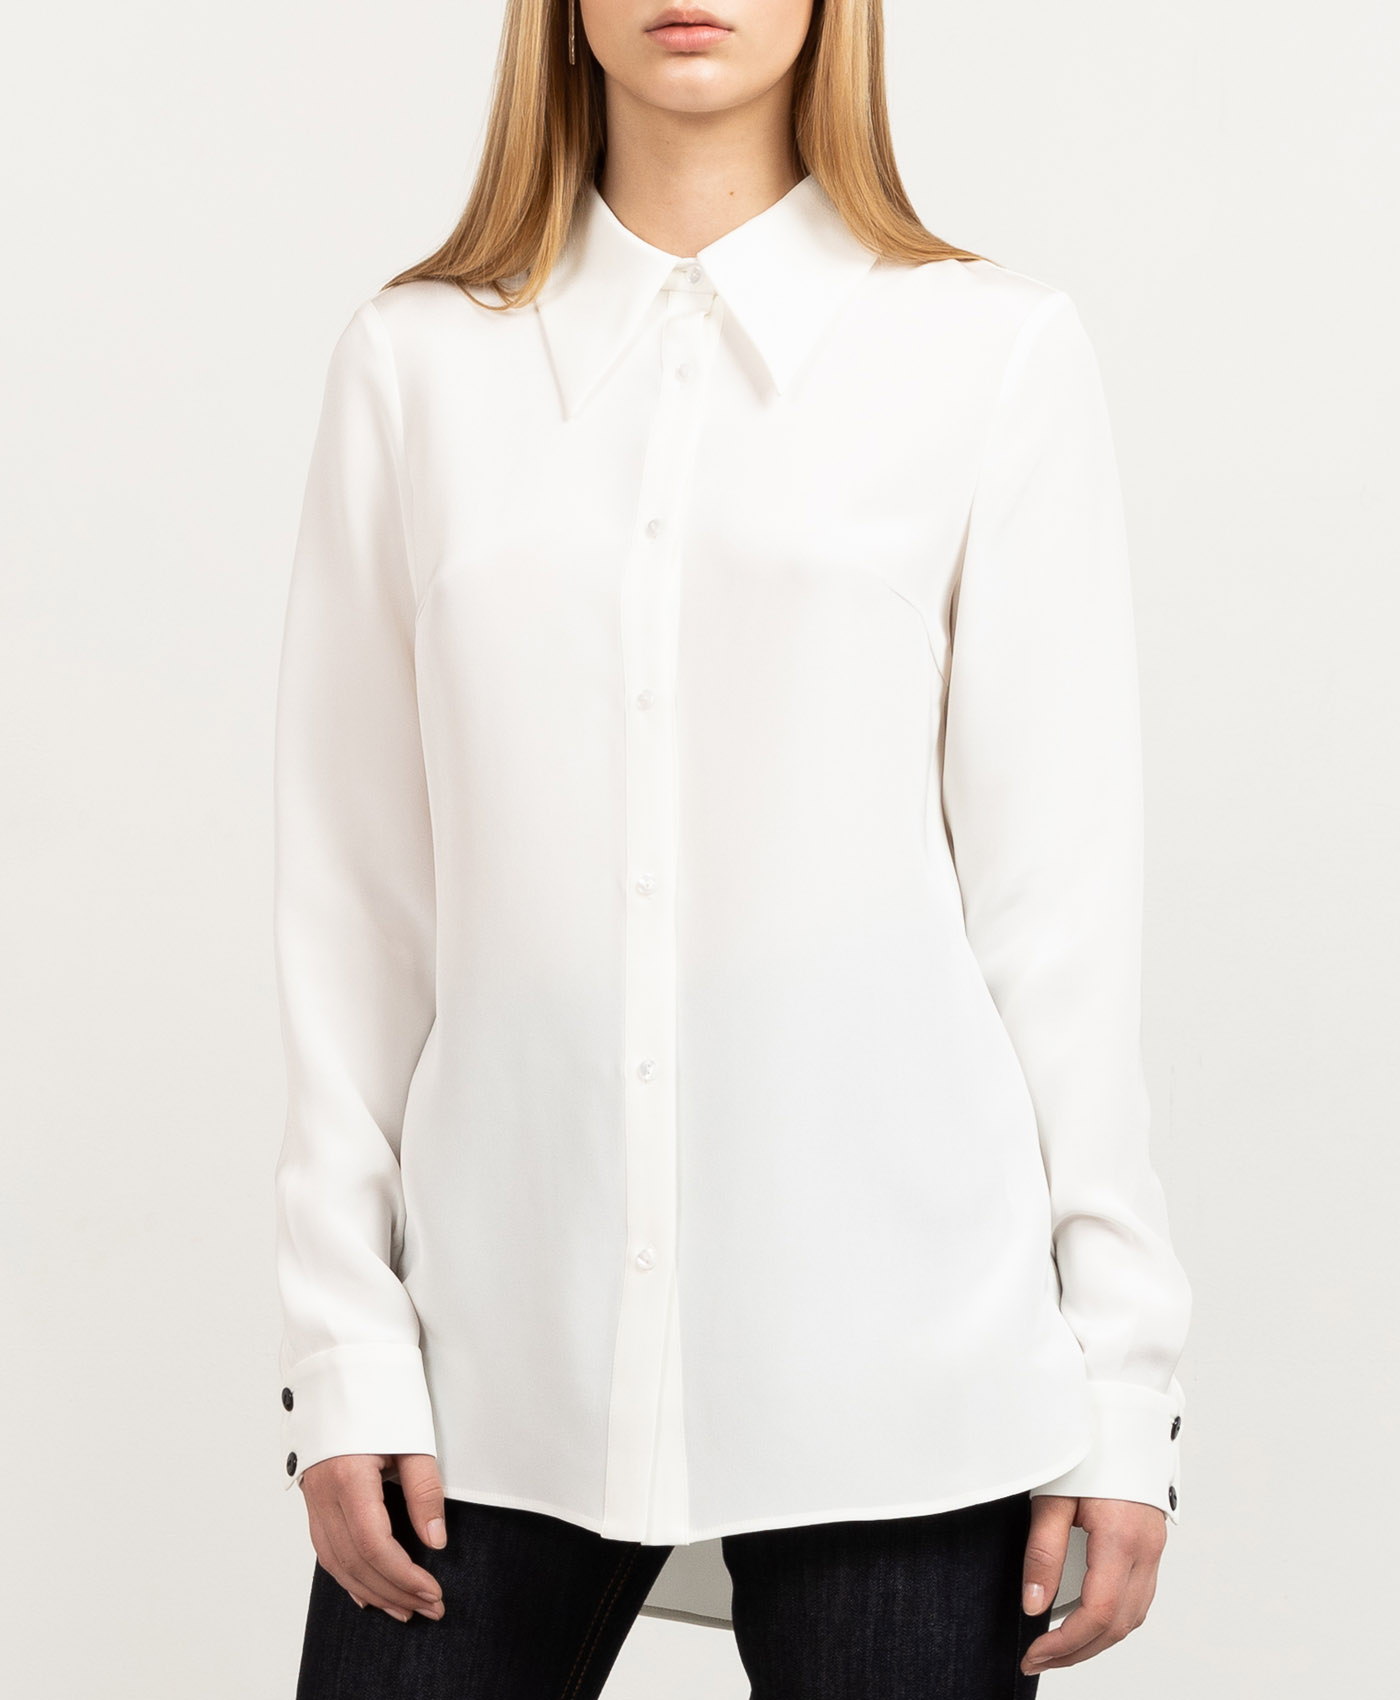 Custom-fit essential off white shirt in silk by Studio Heijne